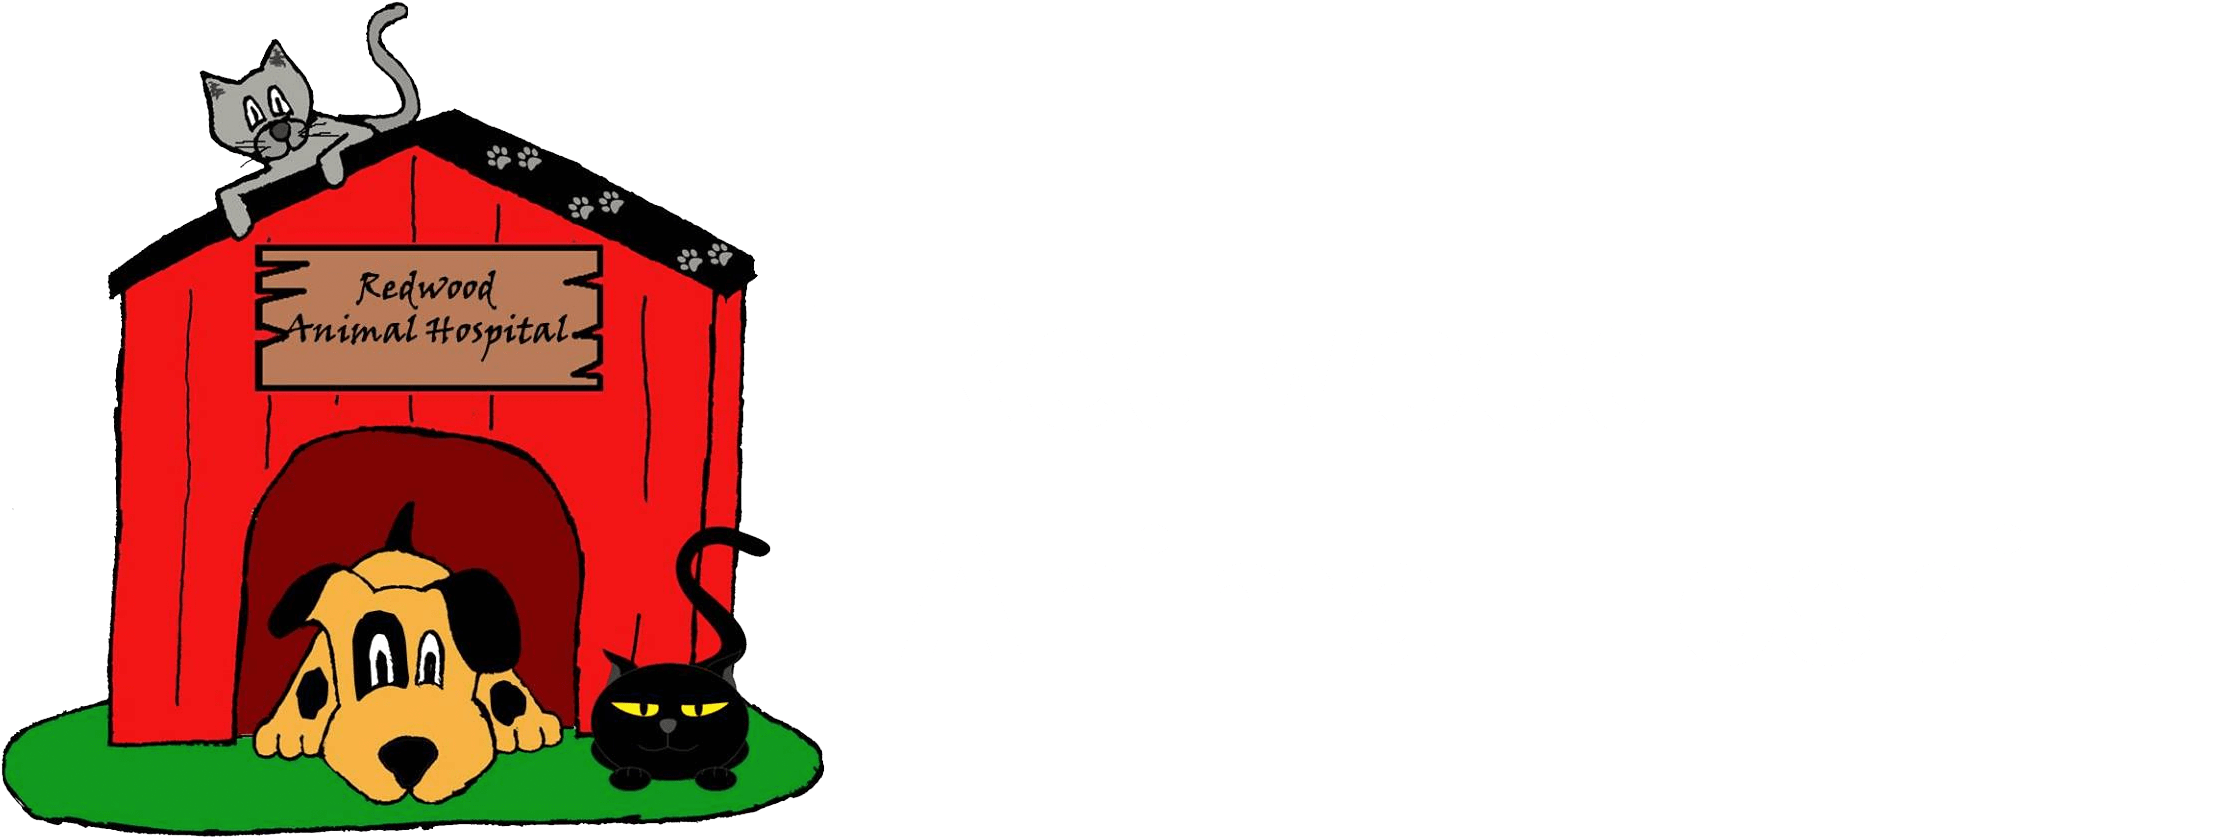 Veterinary Services Redwood Animal - Dog (2363x880)